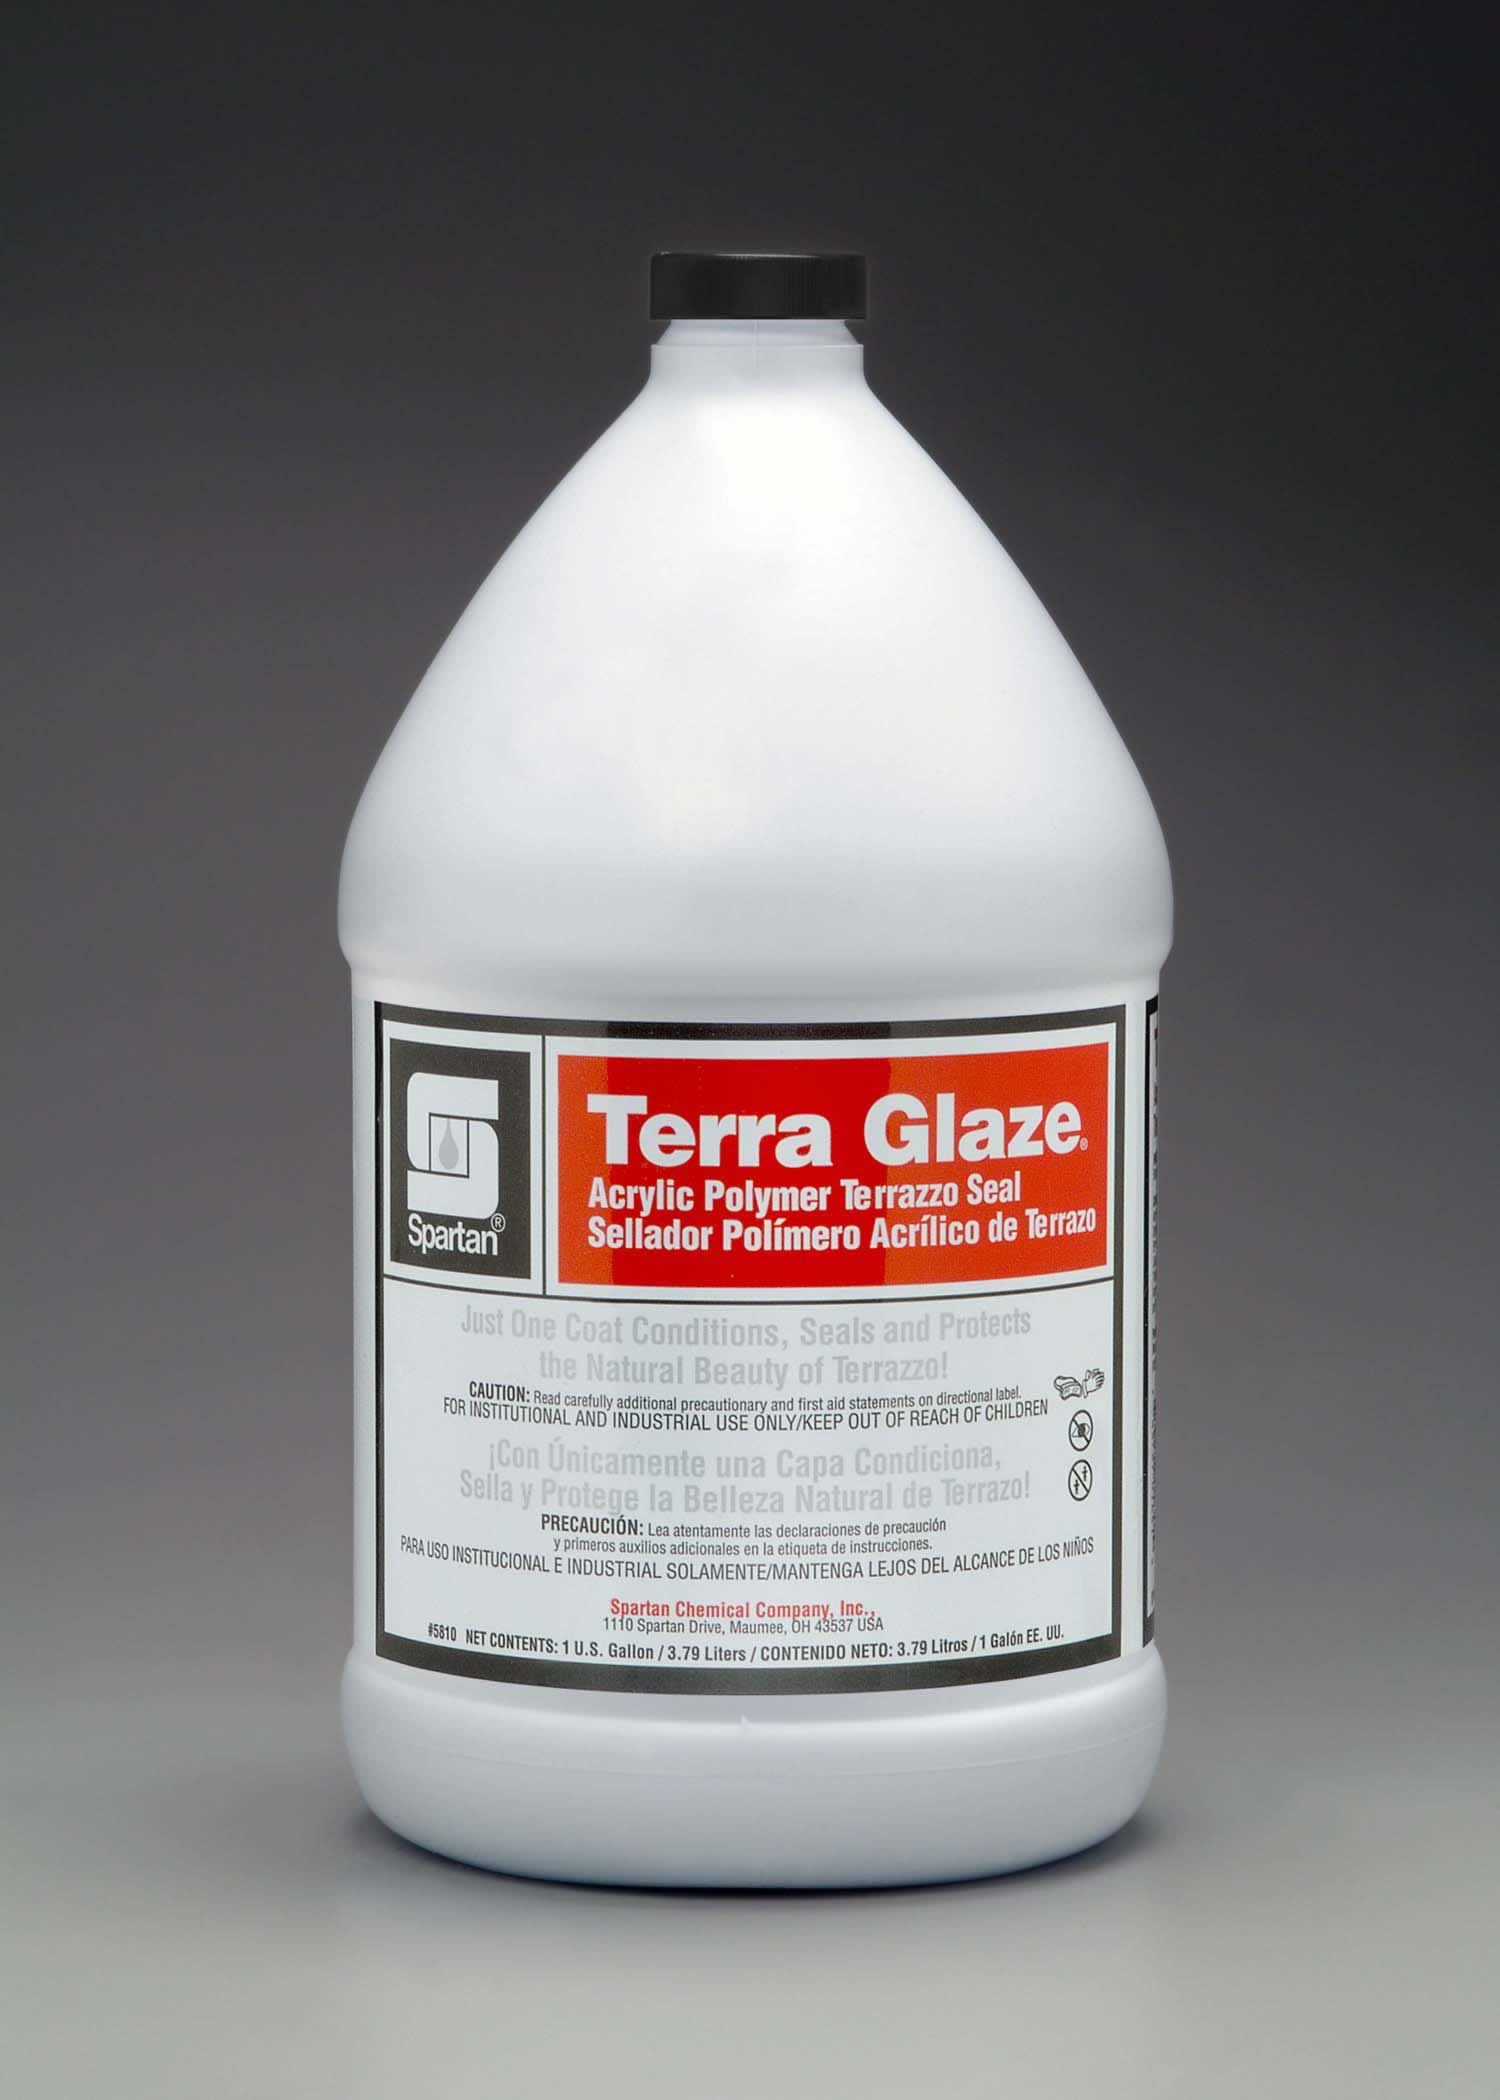 Terra Glaze one-coat acrylic polymer seal for terrazzo